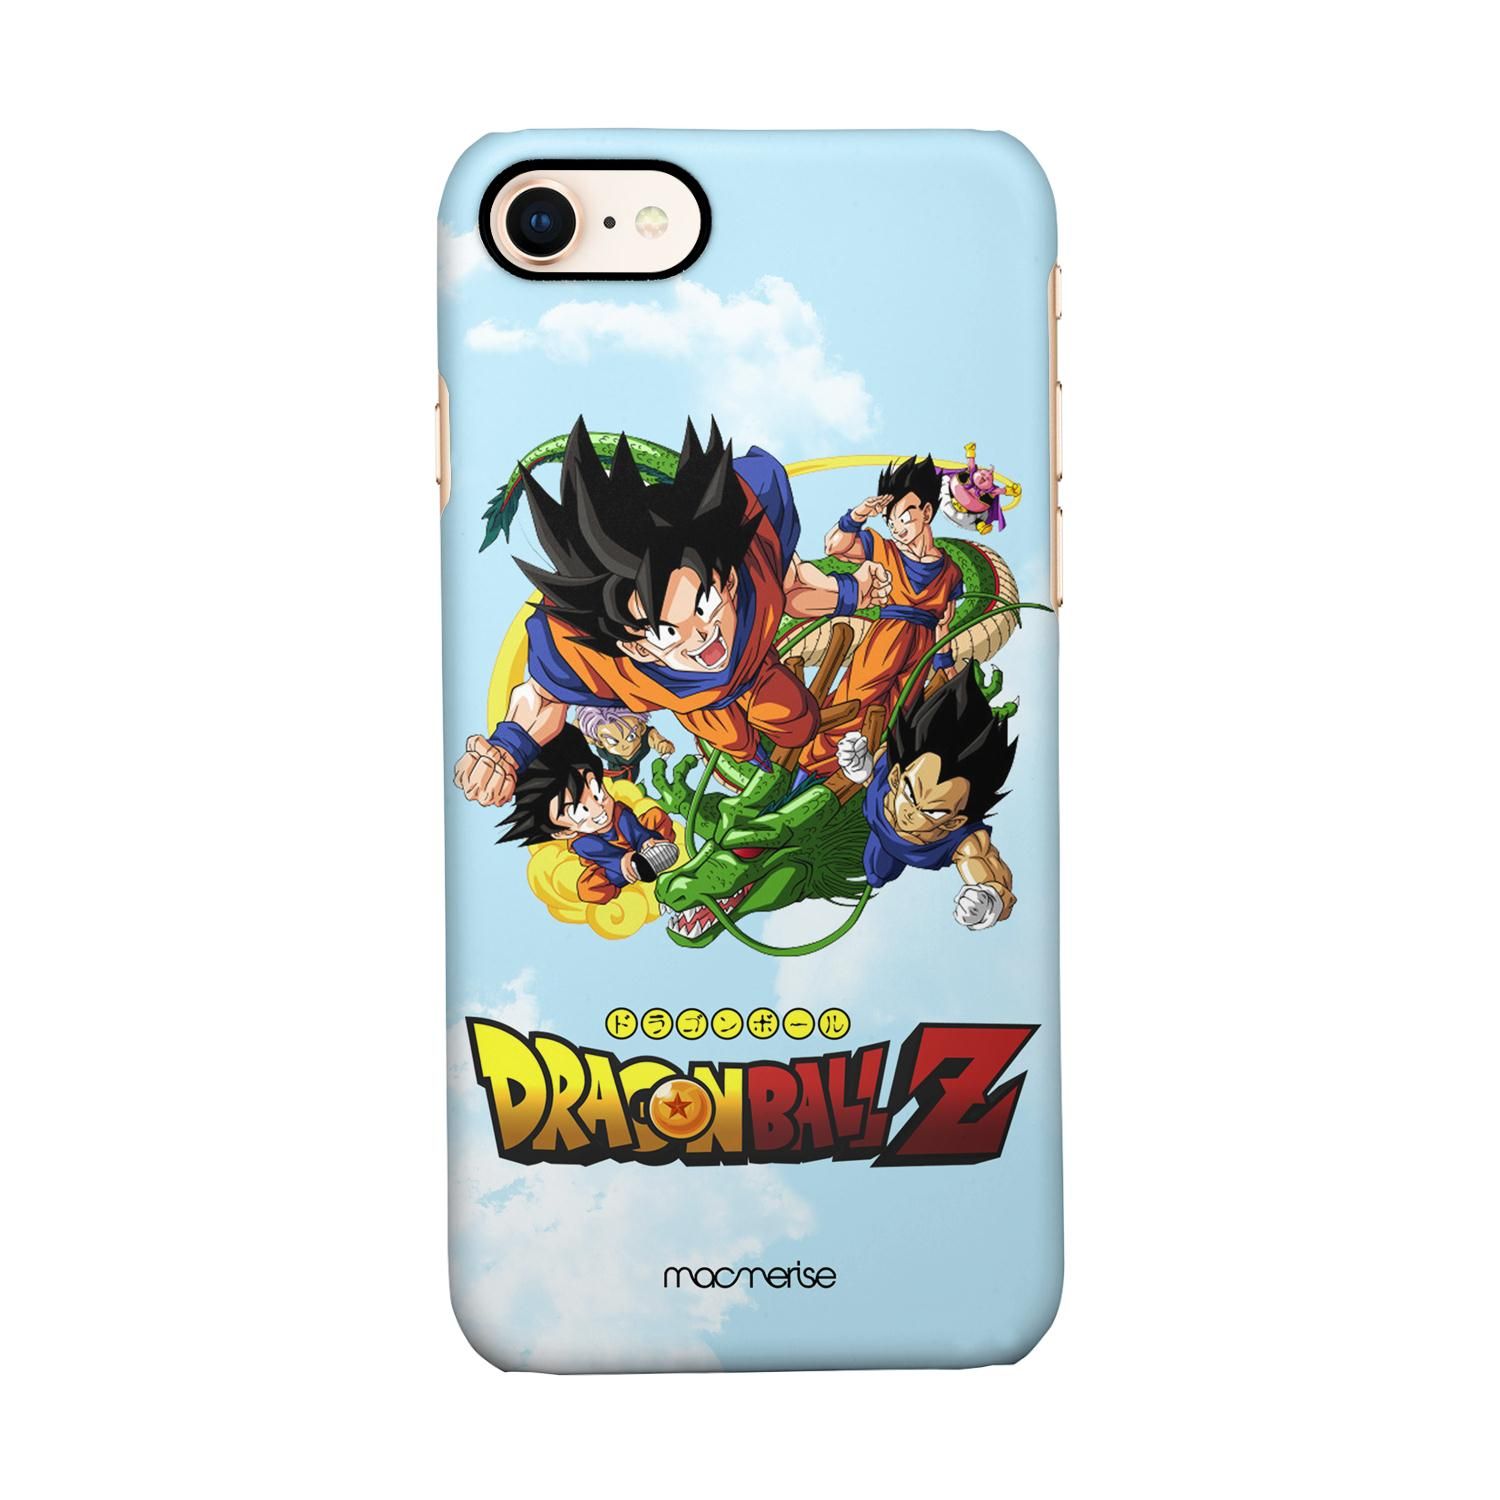 Buy Dragon ball Z - Sleek Phone Case for iPhone 7 Online